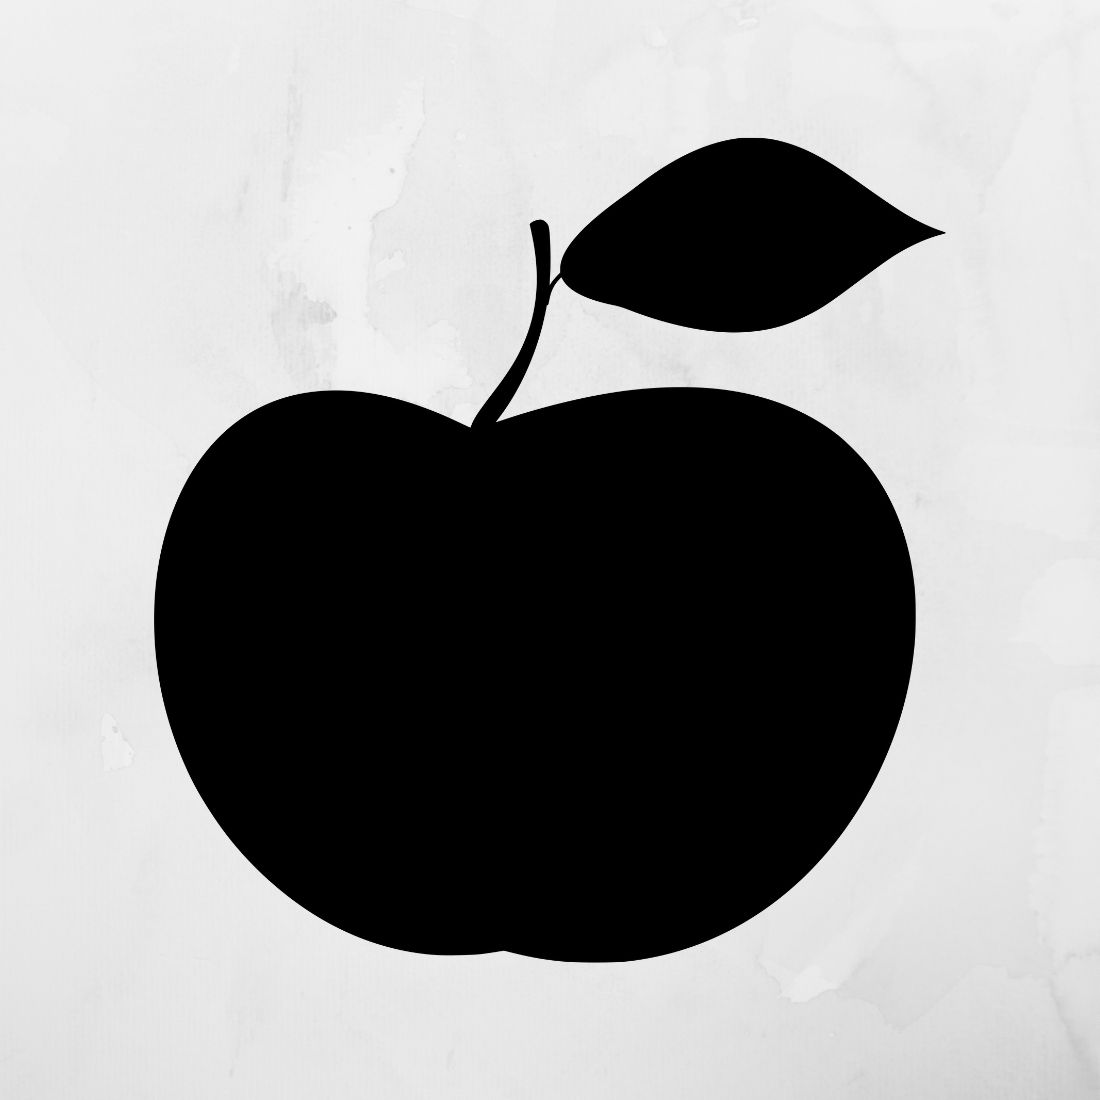 Apple SVG & Apple Silhouette cover.